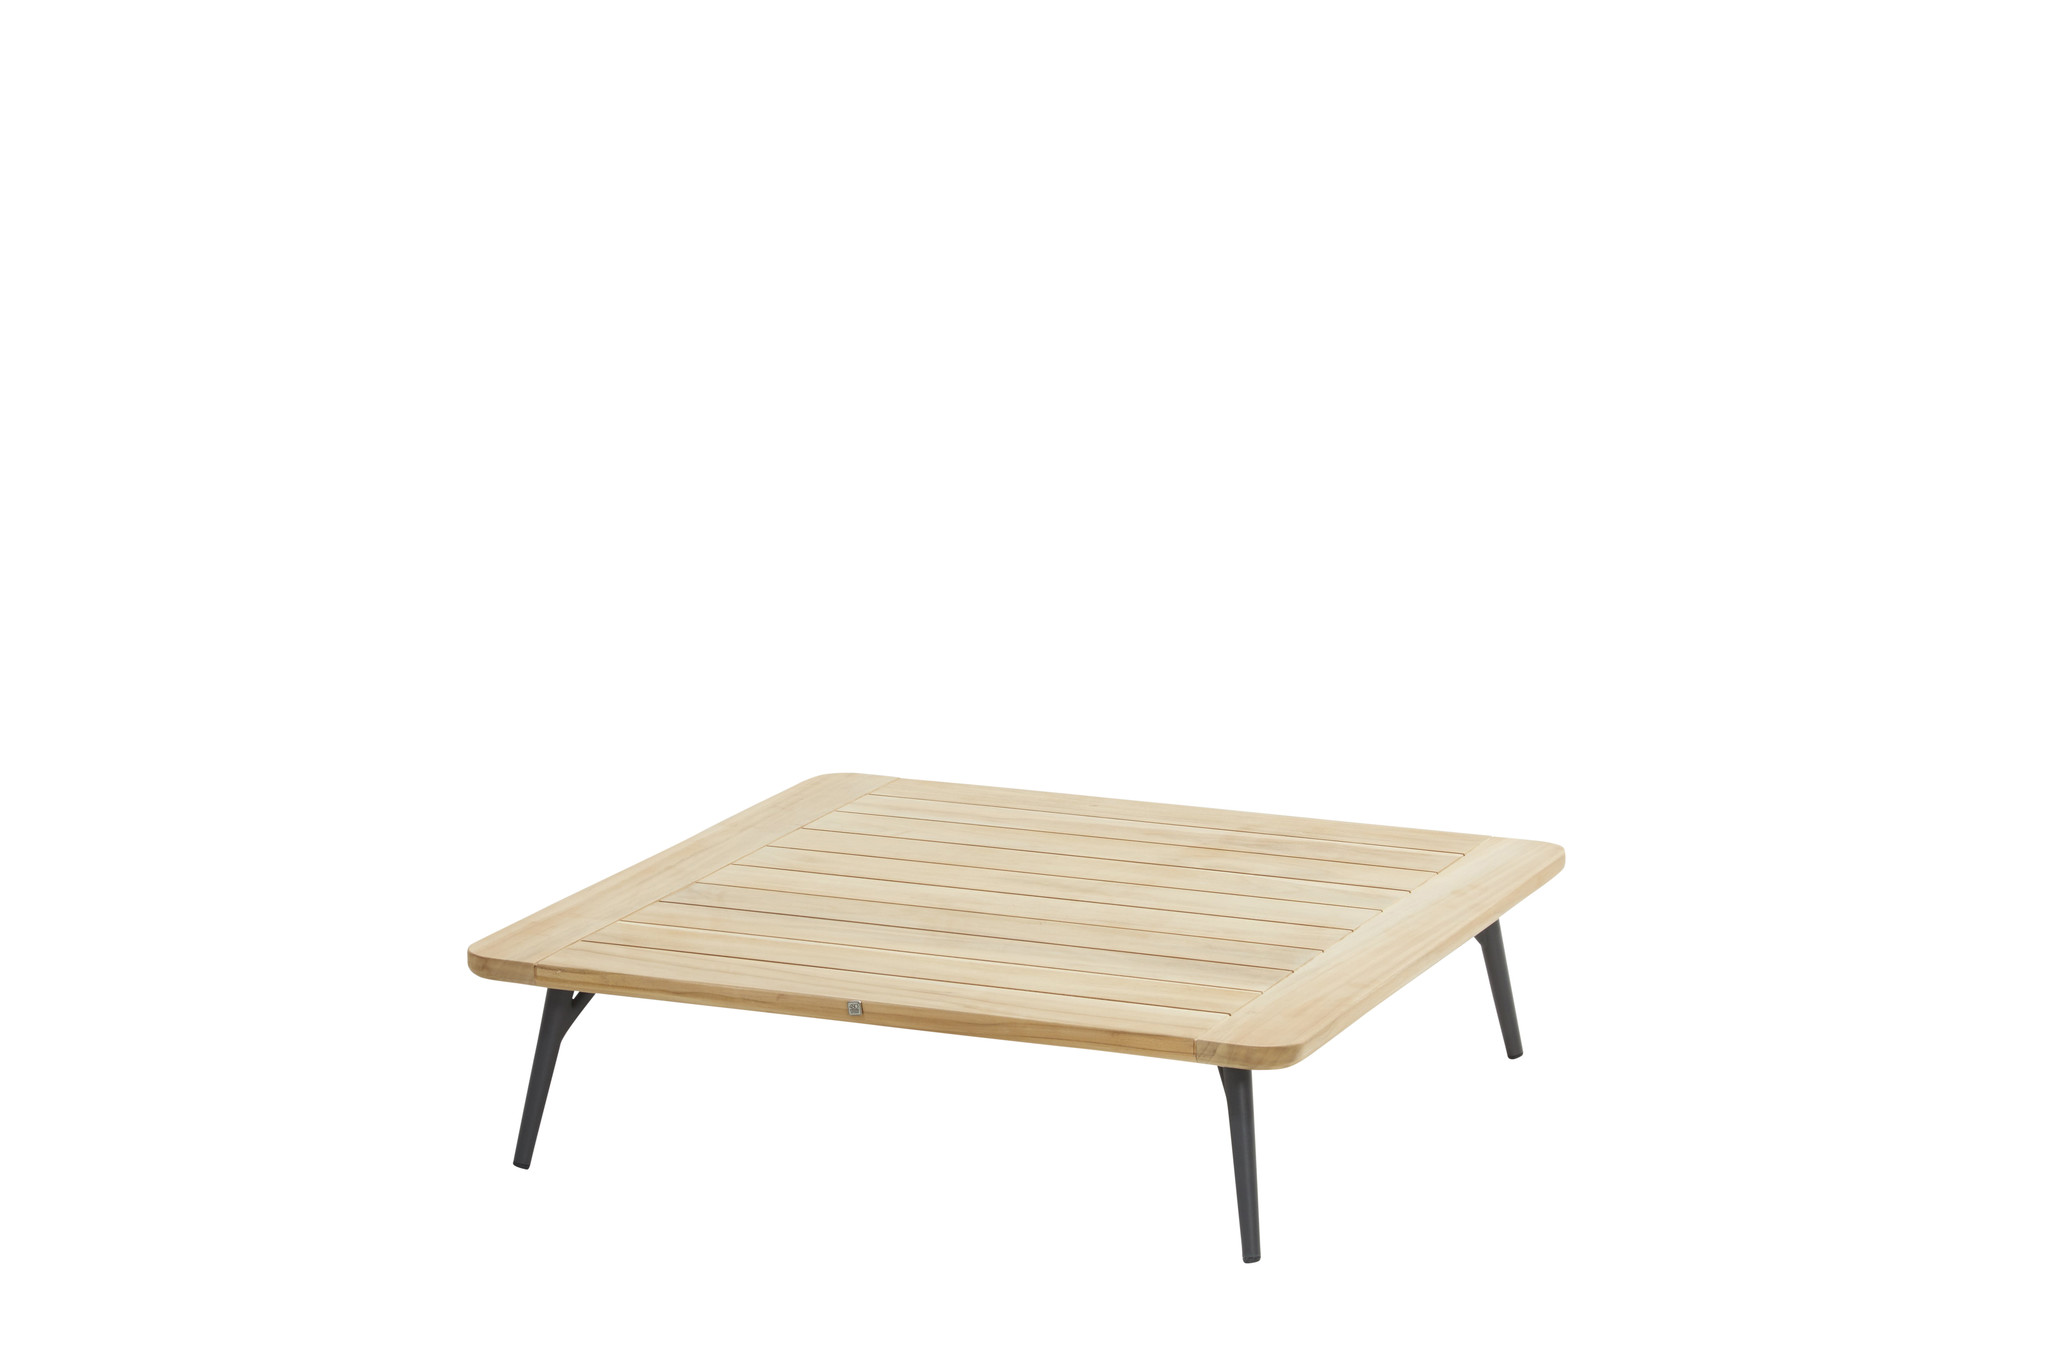 4 | furniture chair Outdoor outdoor Positano Springbed mattress Seasons living | gascylinders - |